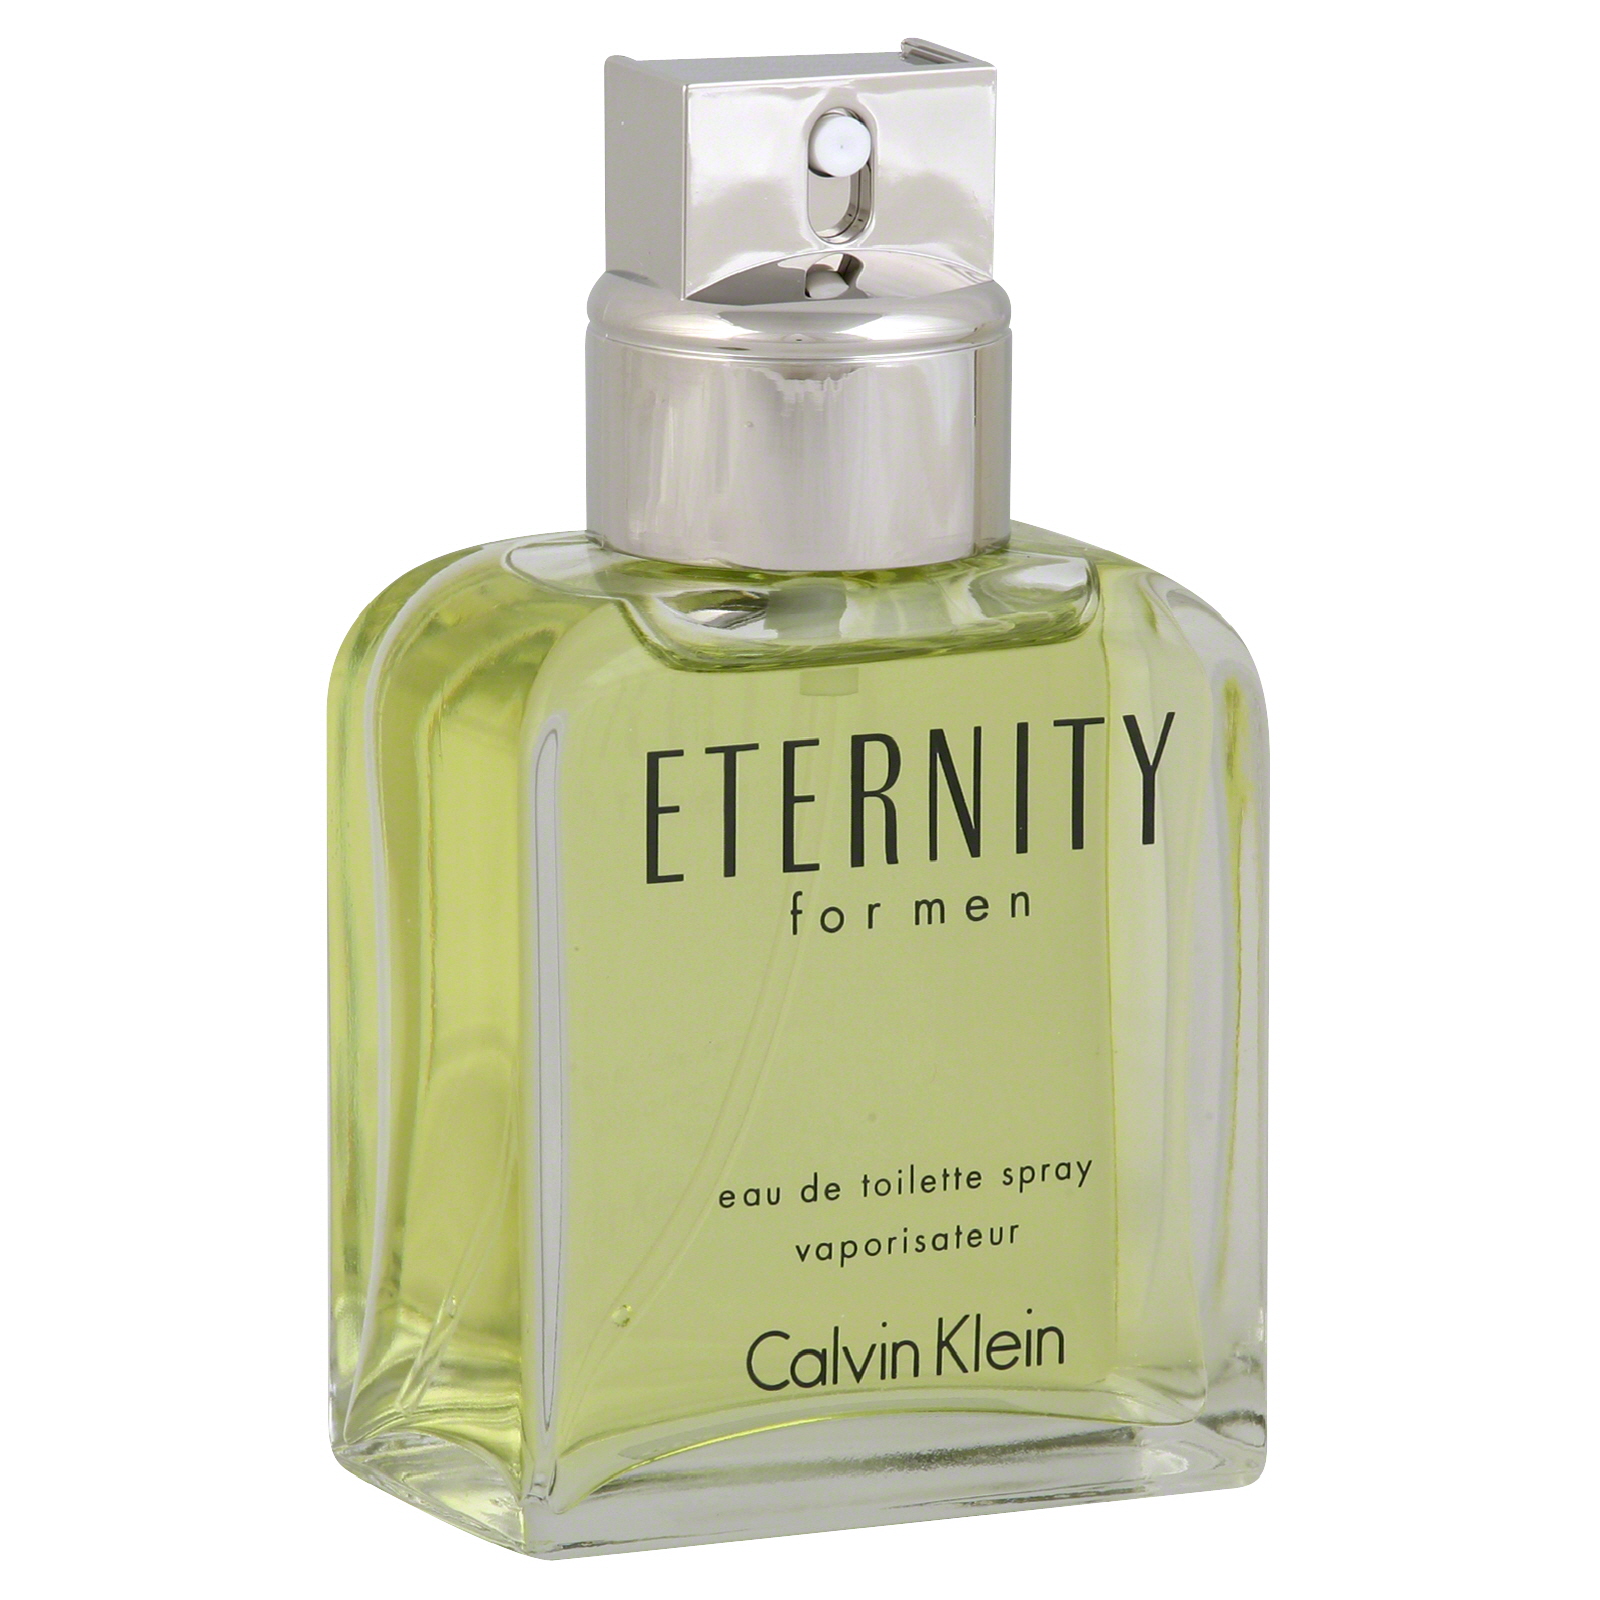 Eternity by Calvin Klein EDT Spray 3.4 Oz for Men